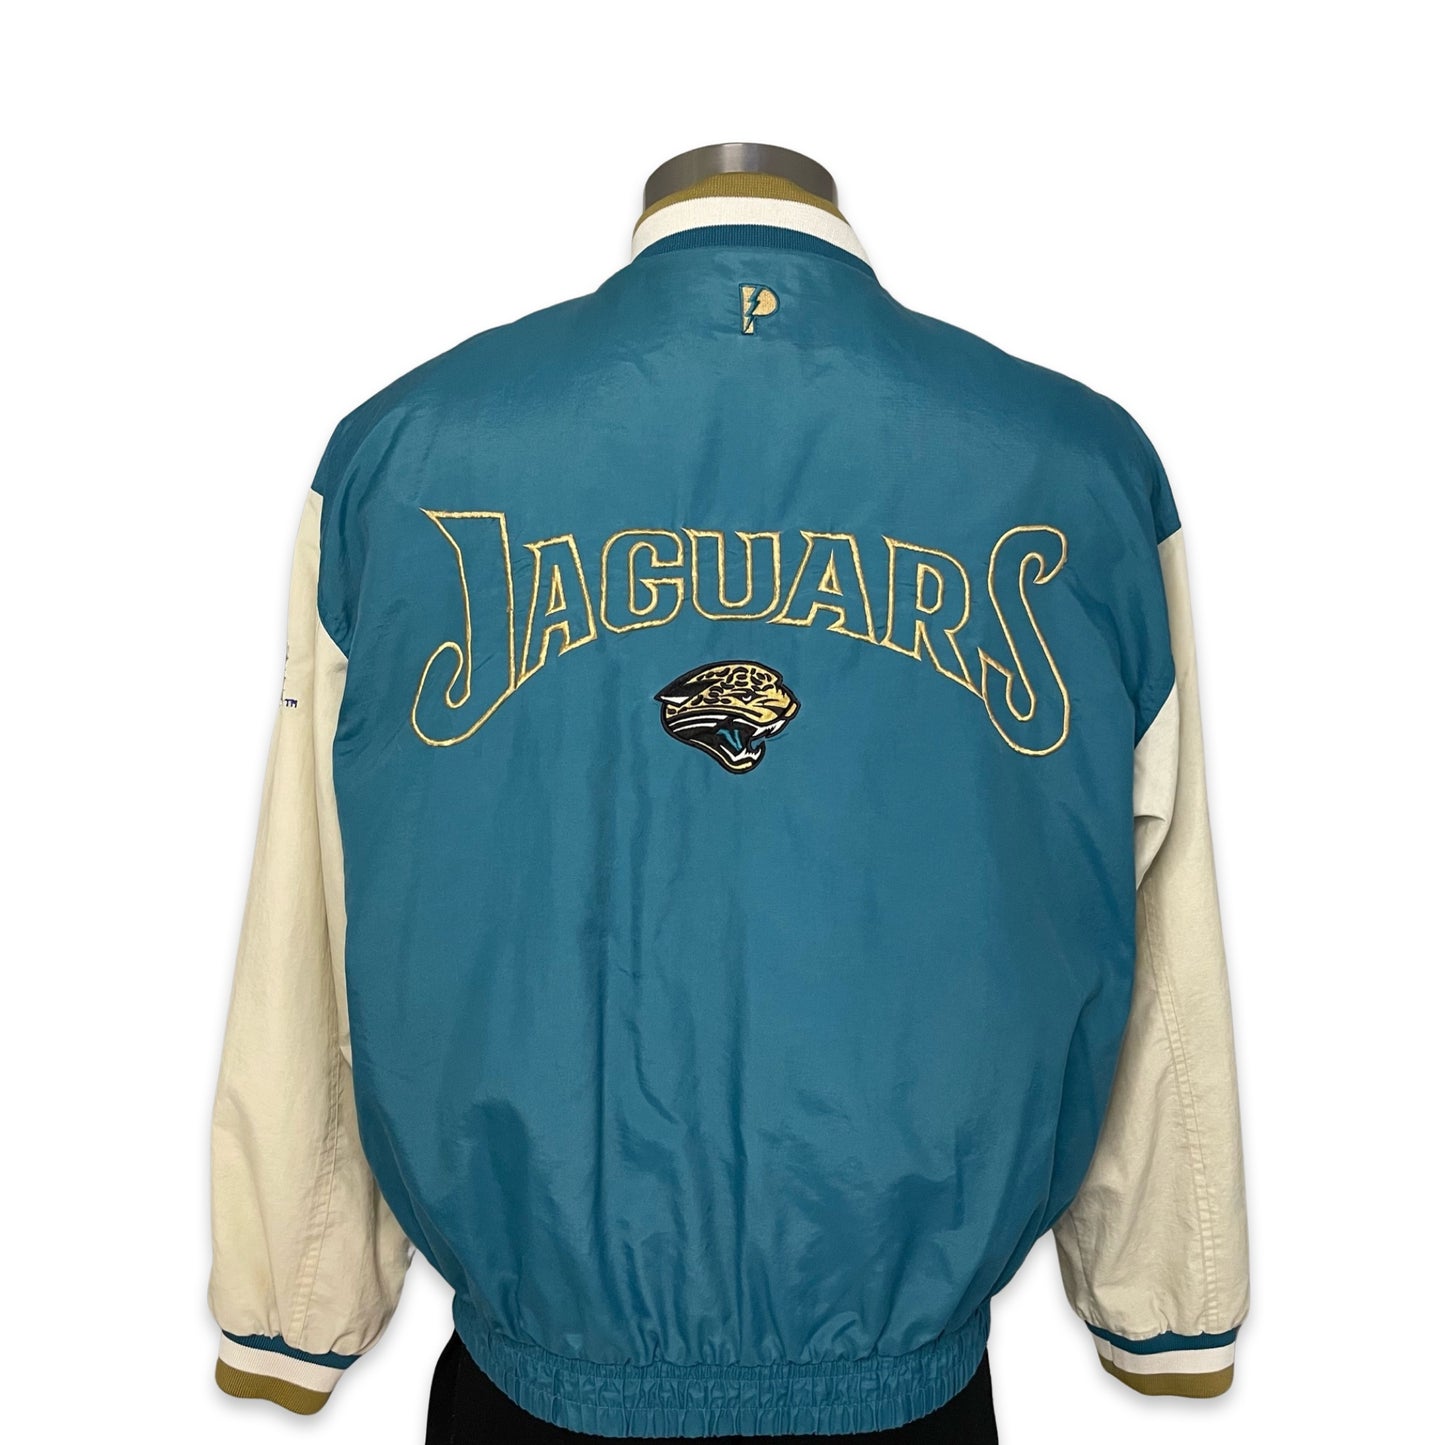 Vintage Jacksonville Jaguars PRO PLAYER varsity jacket size MEDIUM